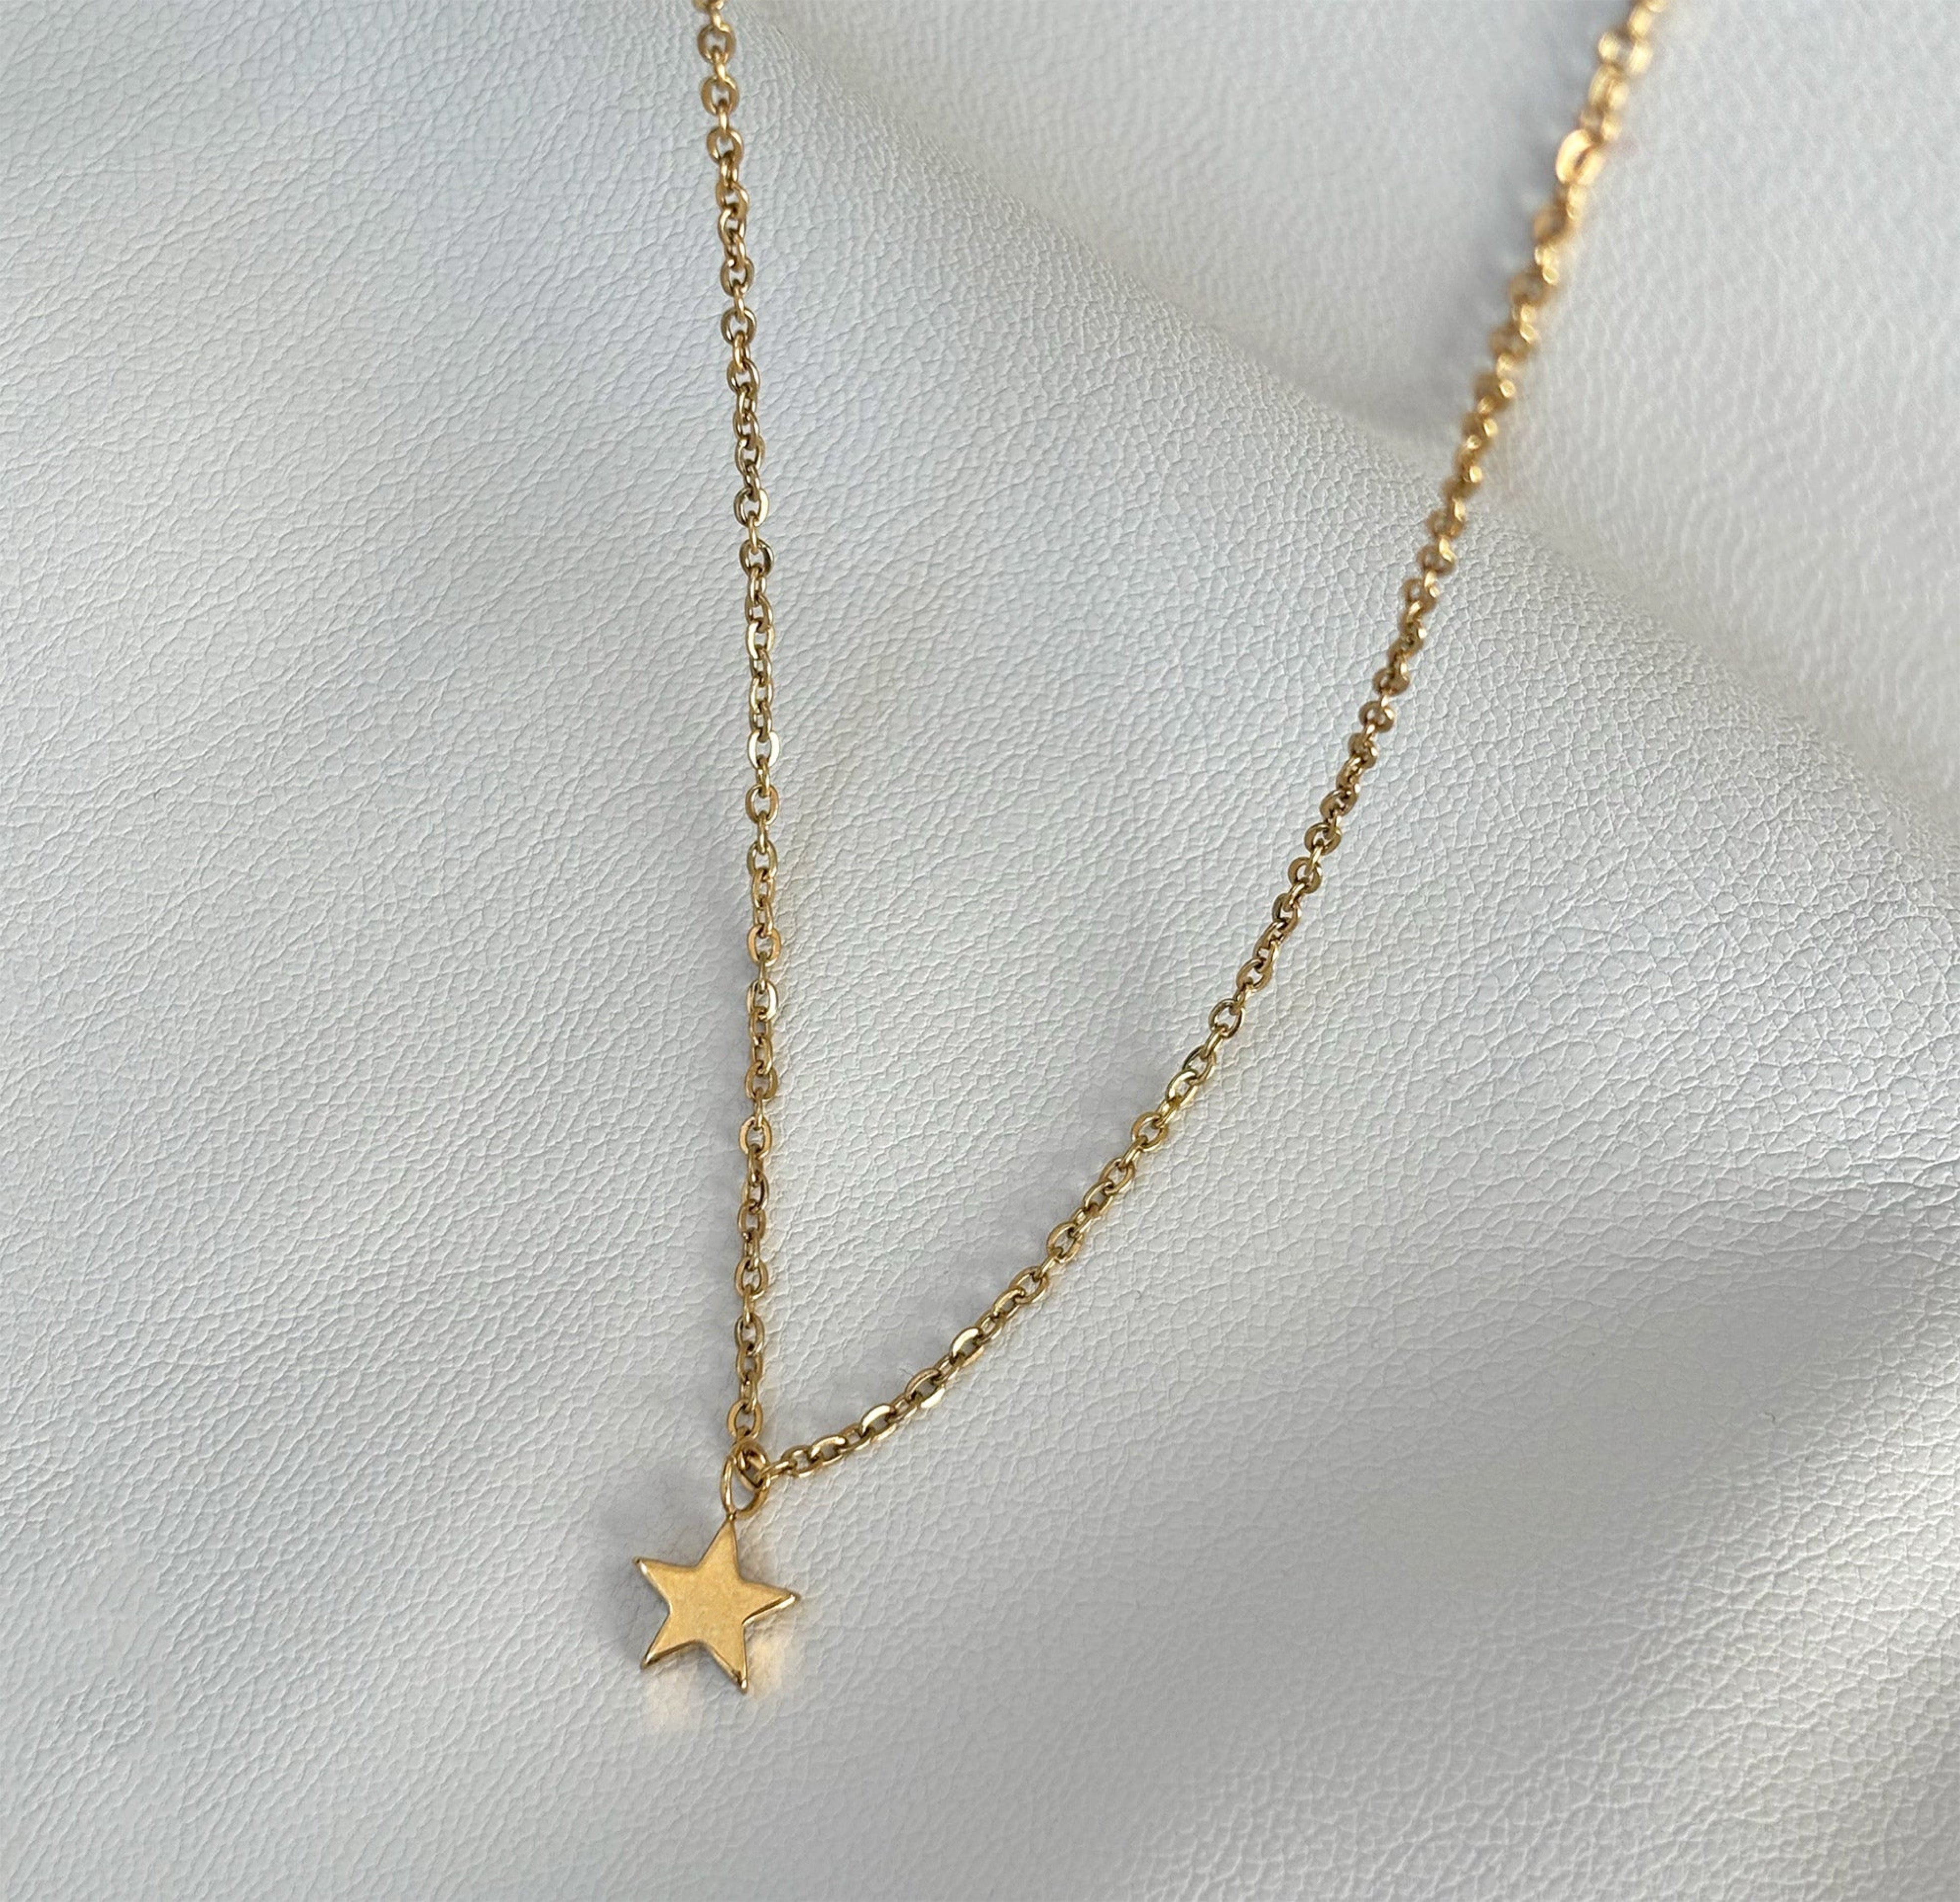 gold dainty star necklace waterproof jewelry